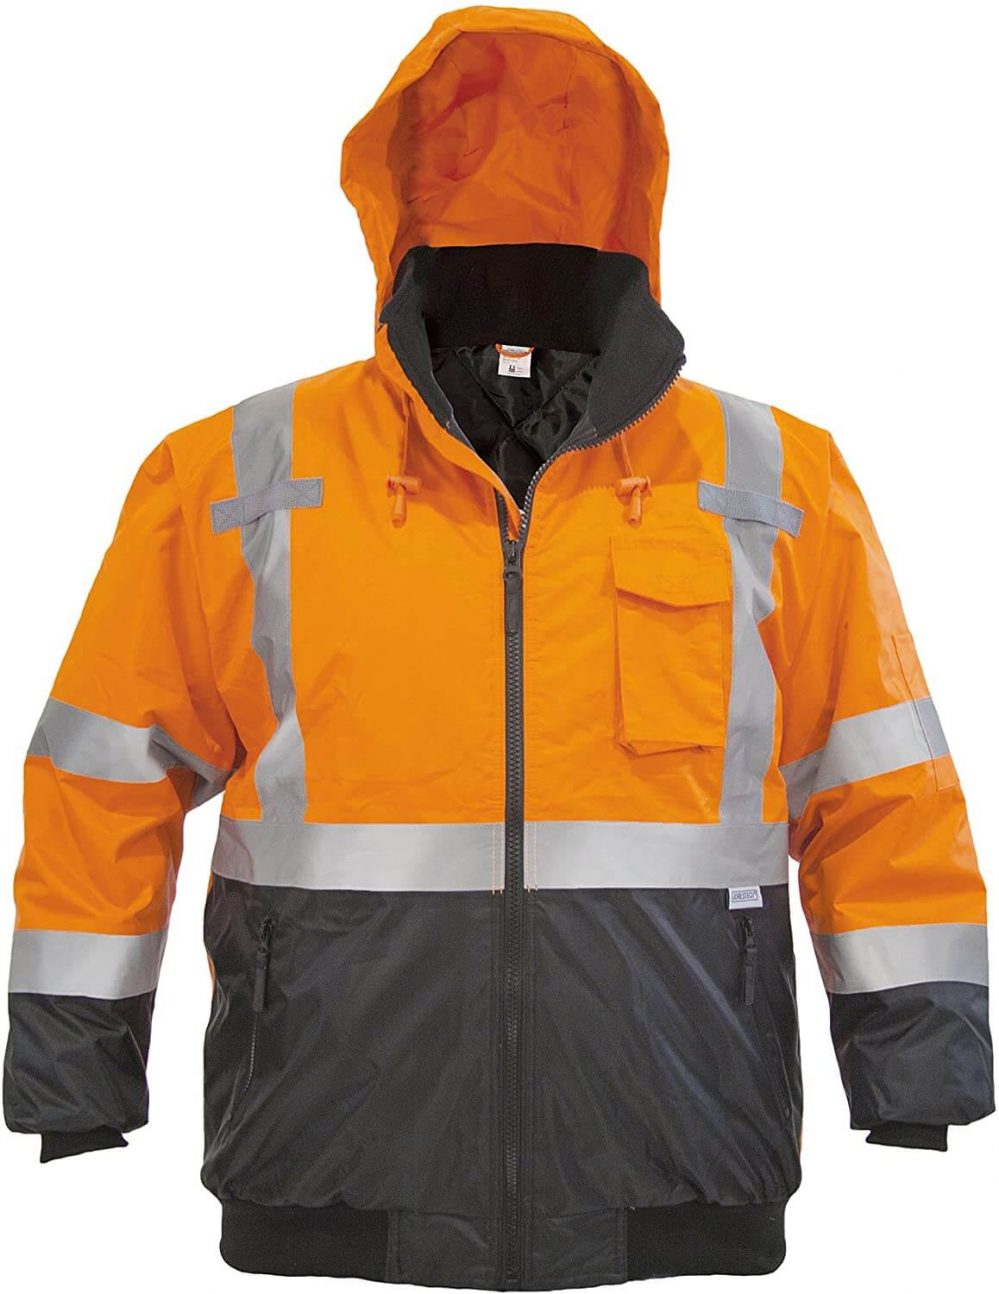 jorestech-safety-bomber-jacket-waterproof-reflective-high-visibility